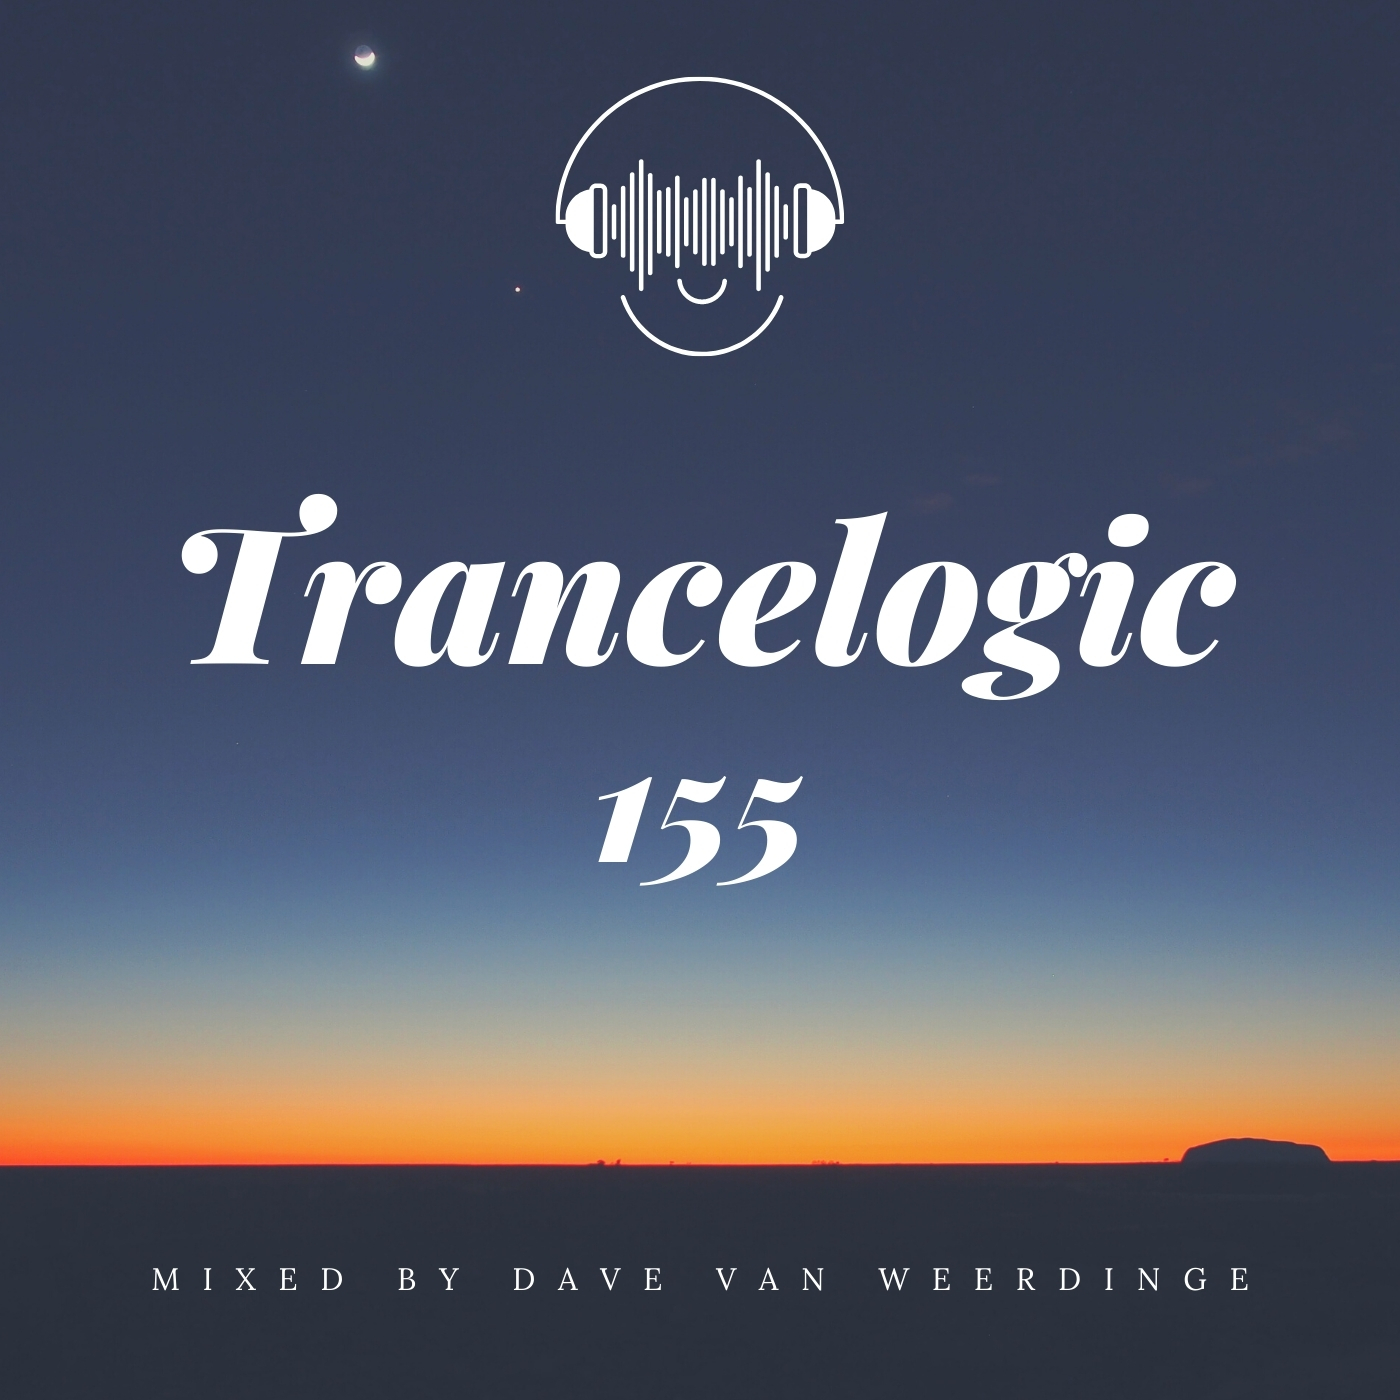 Trancelogic 155 by Dave van Weerdinge